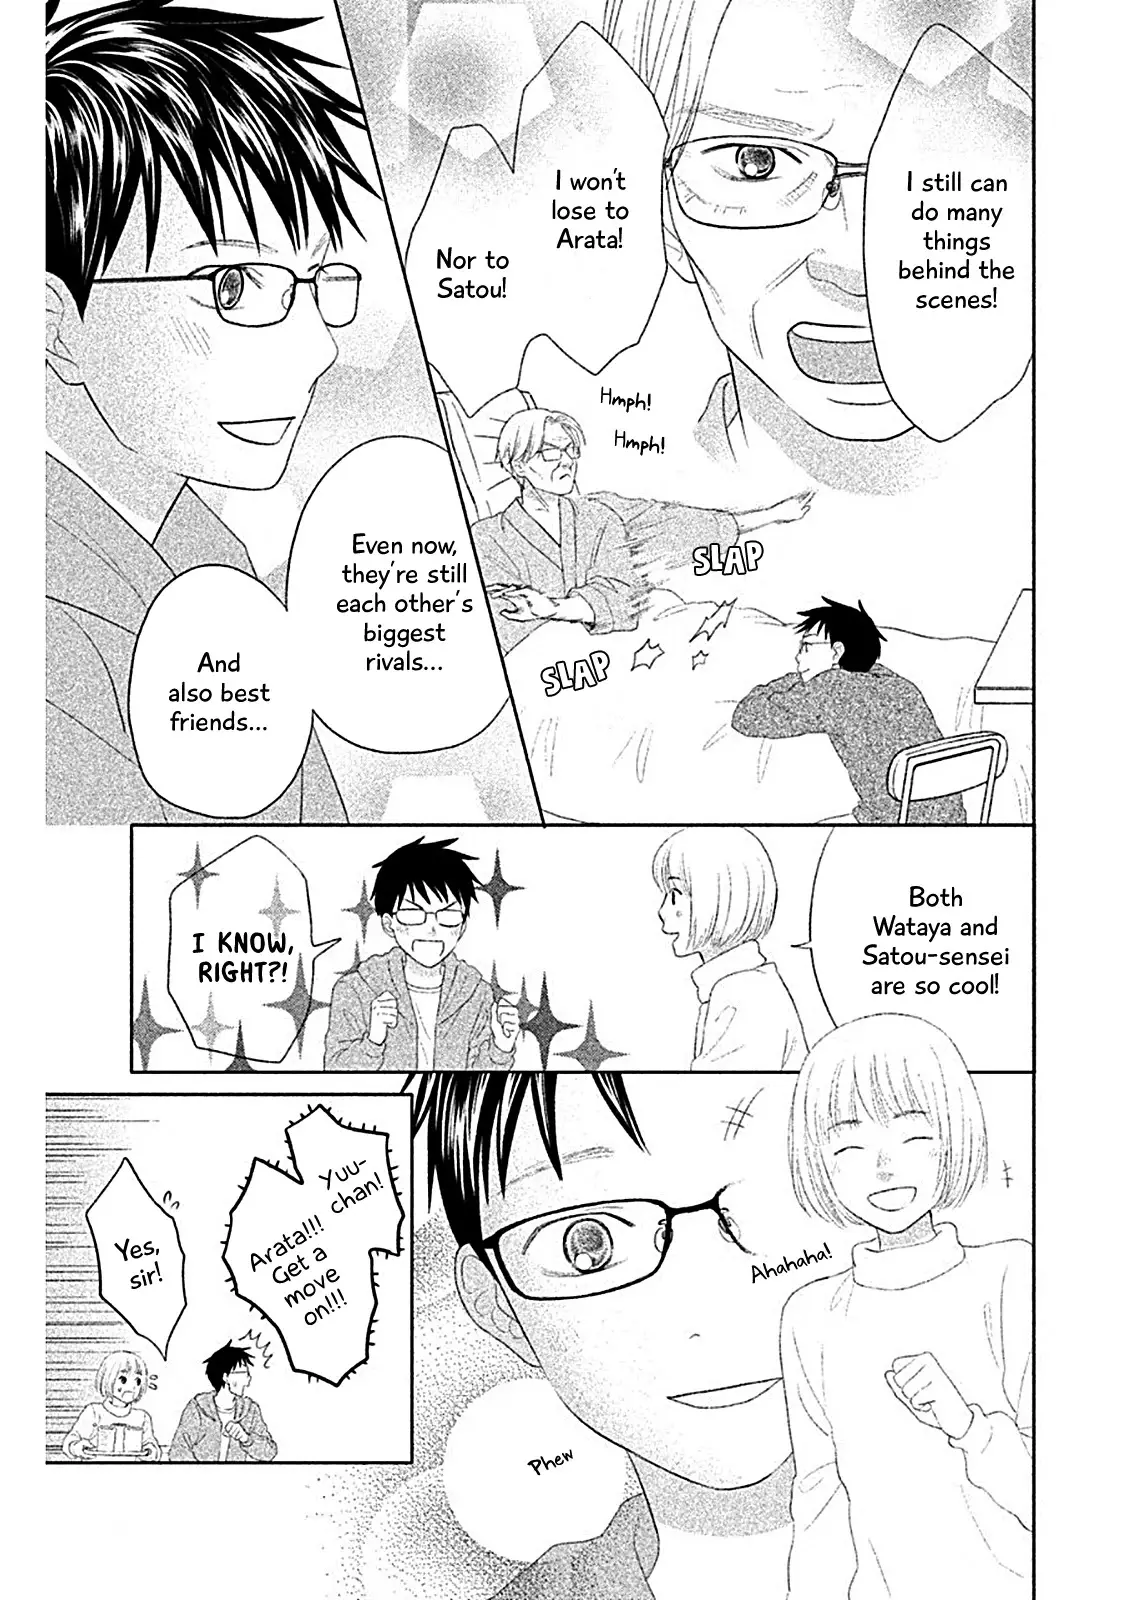 Chihayafuru: Middle School Arc - 6 page 14